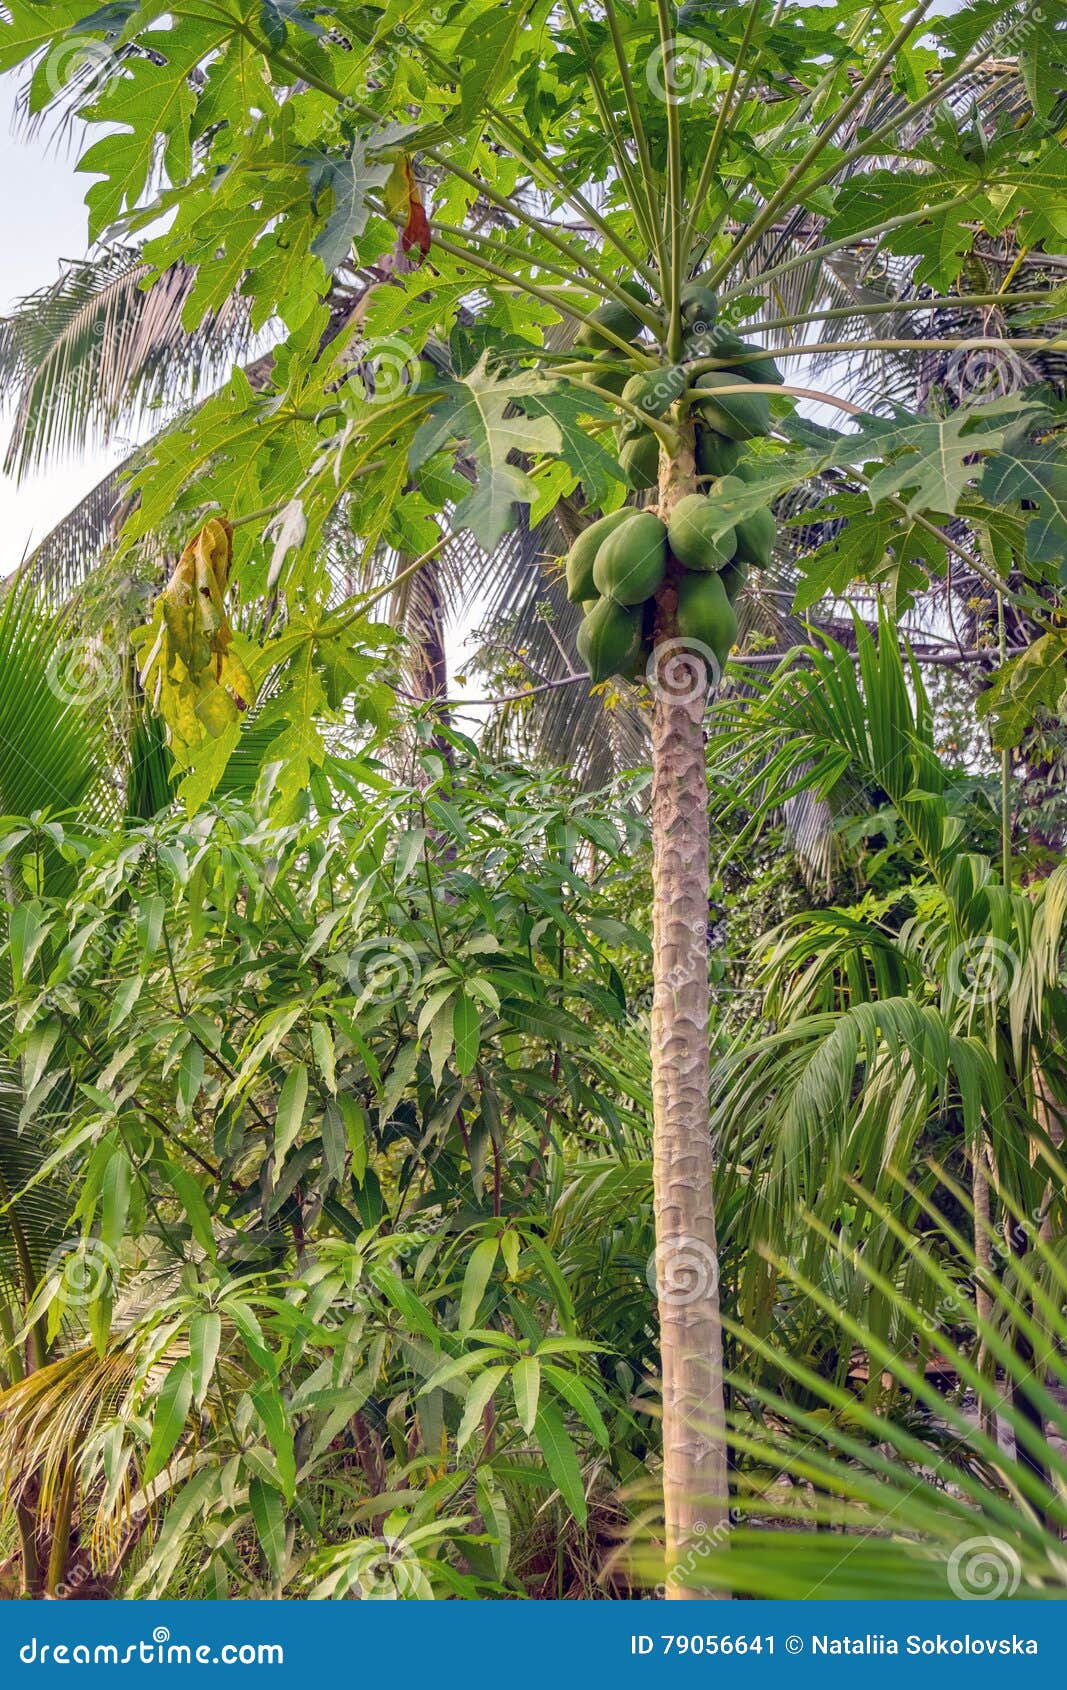 Unripe Many Green Papayas on Tree Stock Image - Image of canaria ...